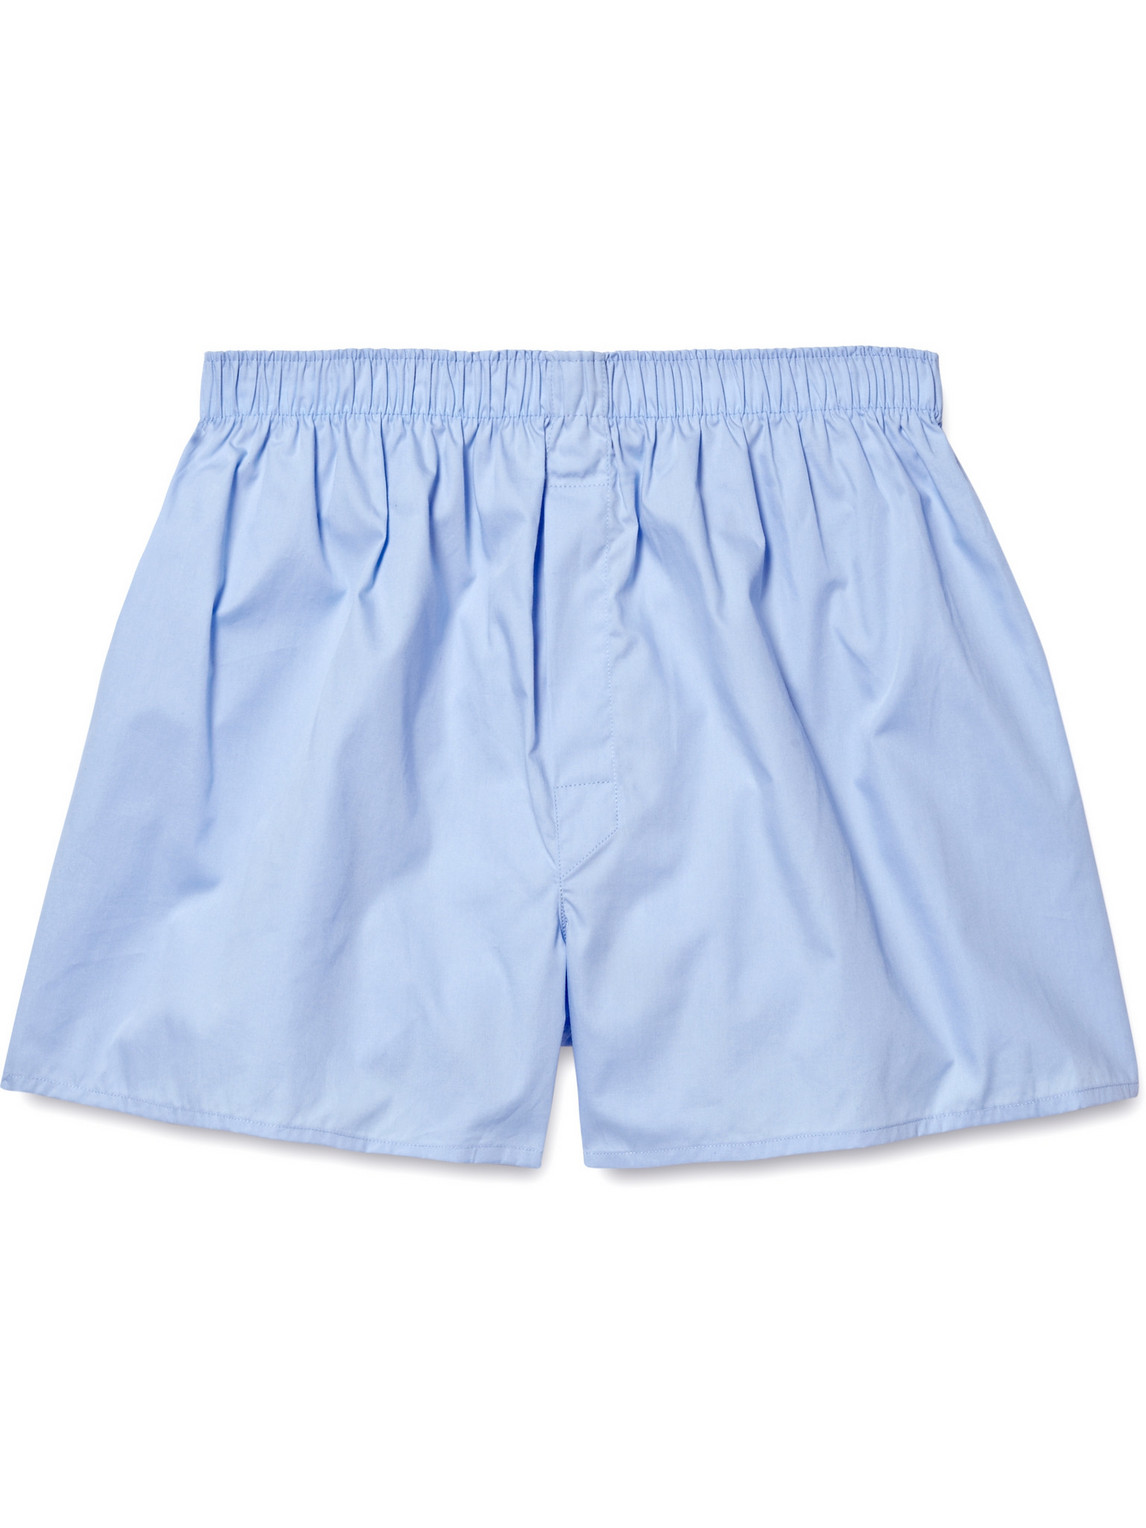 Sunspel Cotton Boxer Shorts In Blue